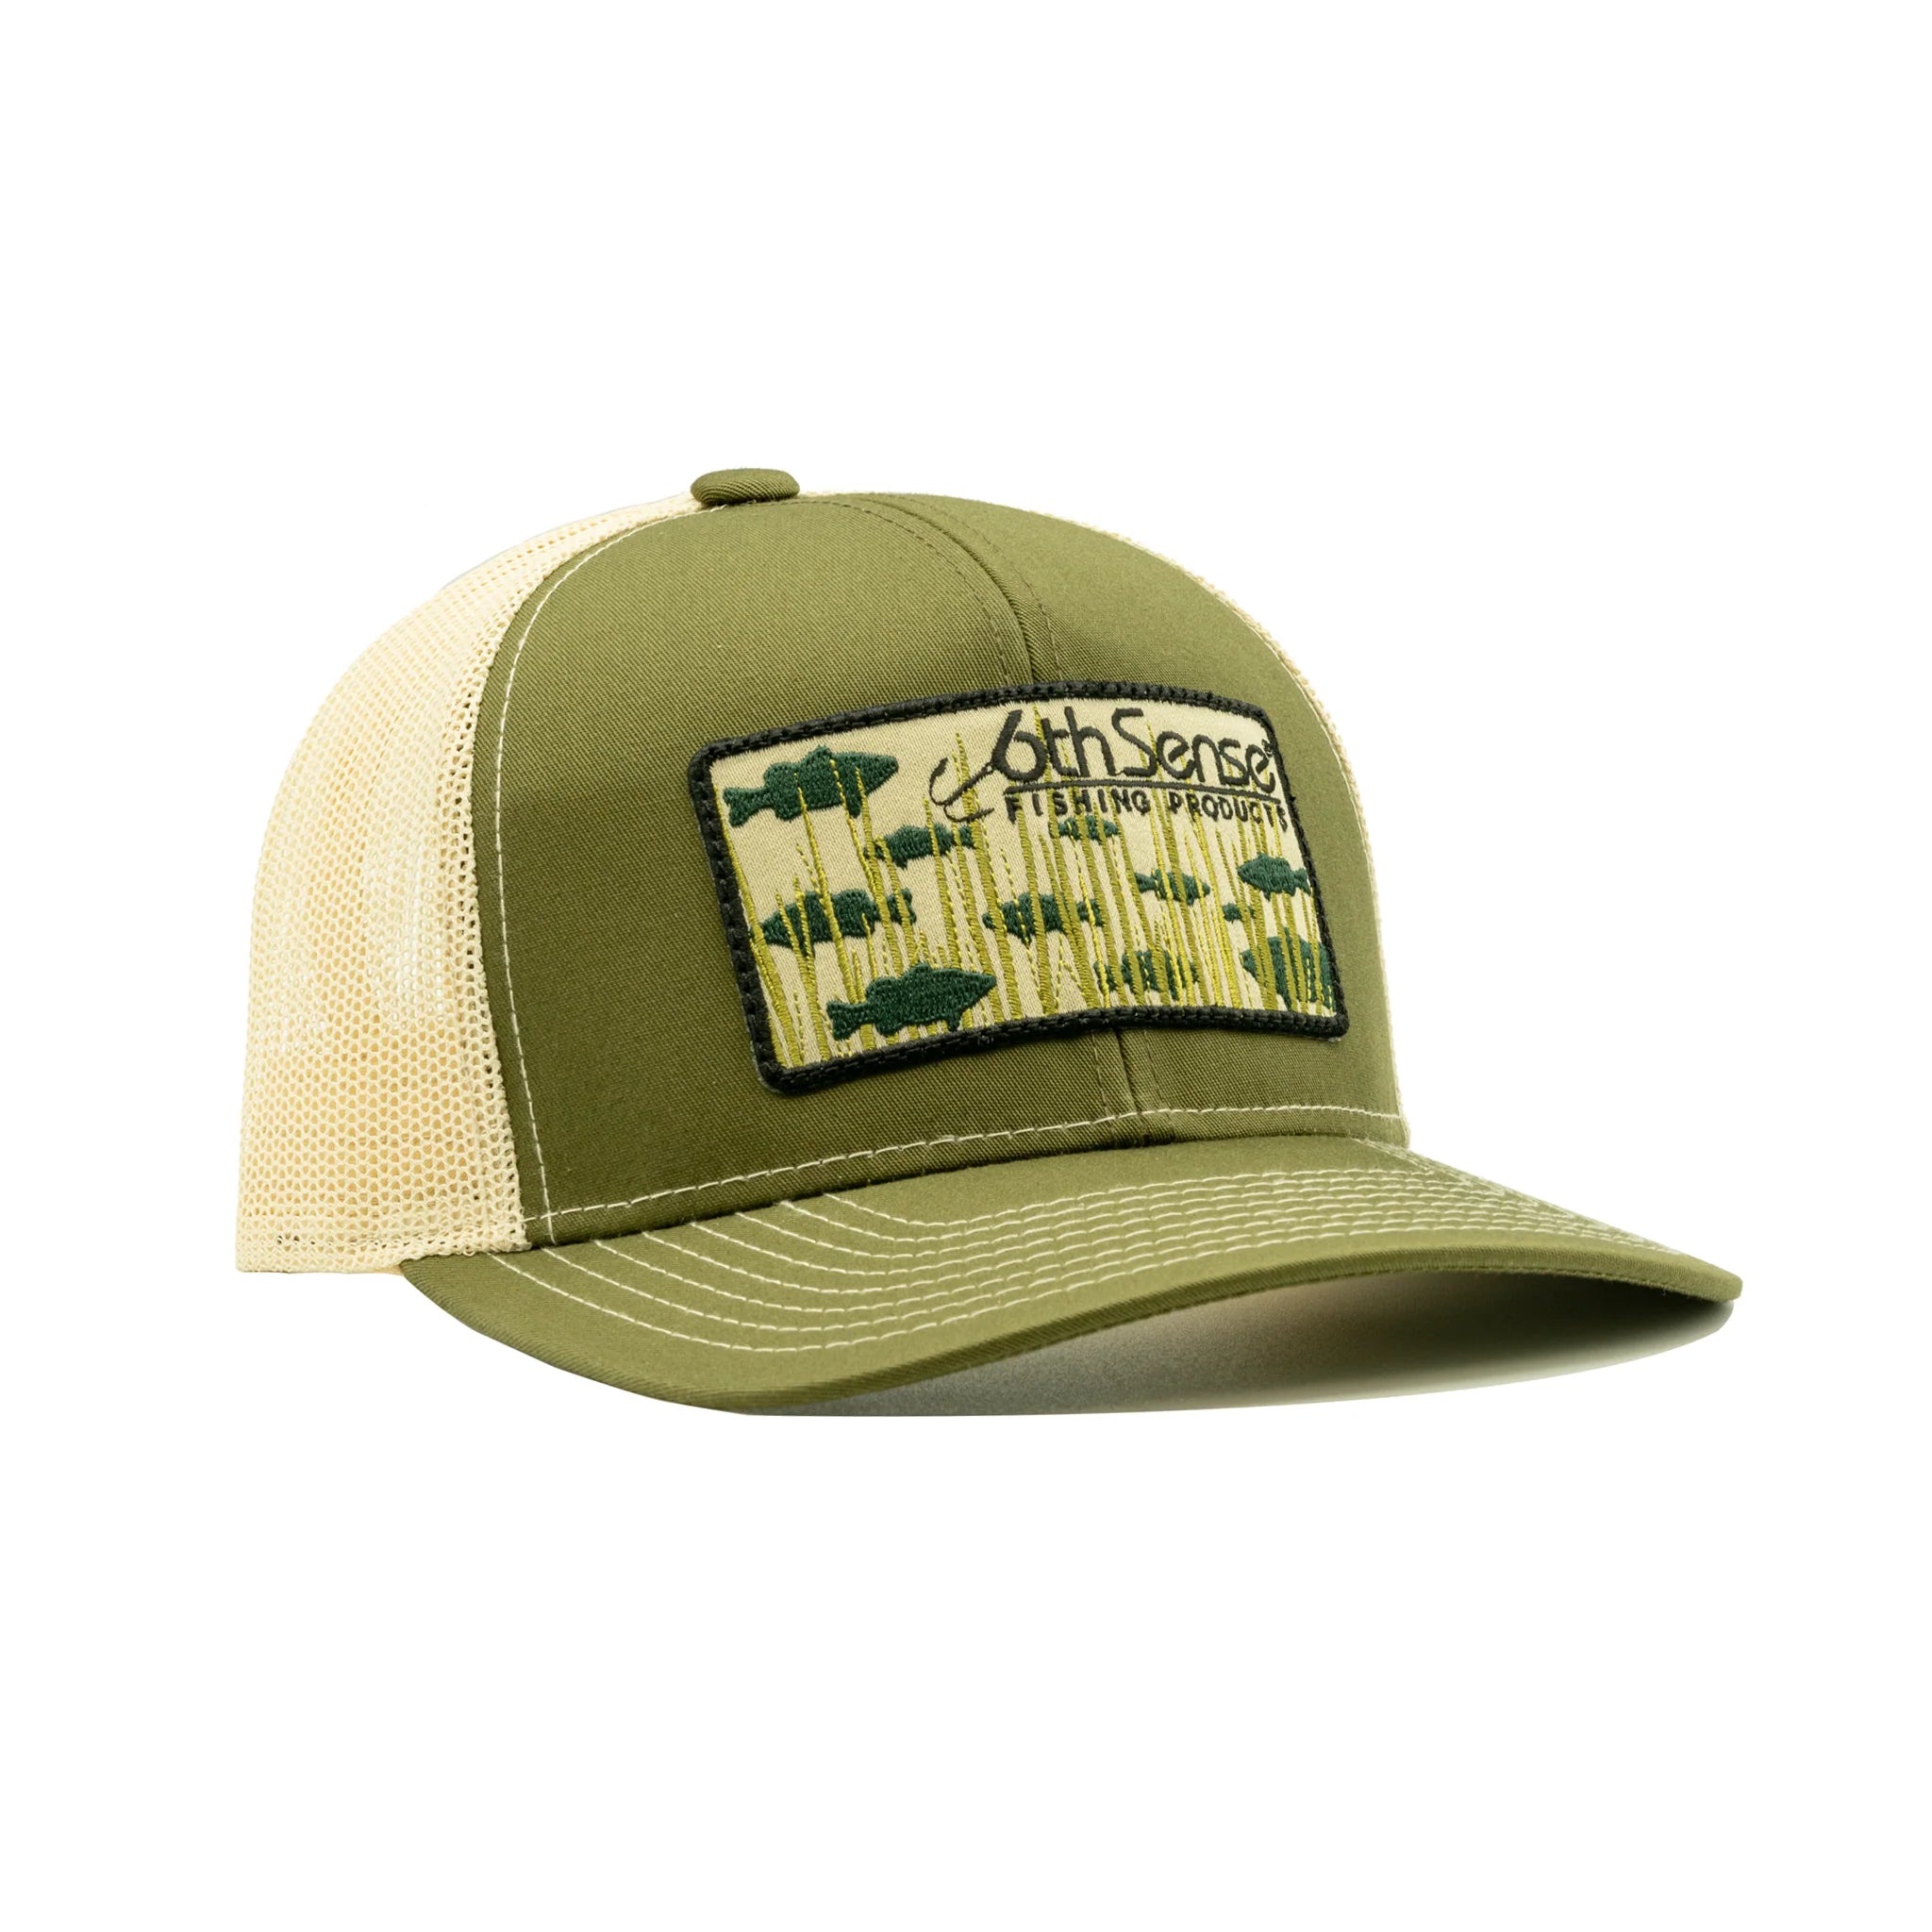 Buy hay-grass-bass-green-tan 6TH SENSE HATS